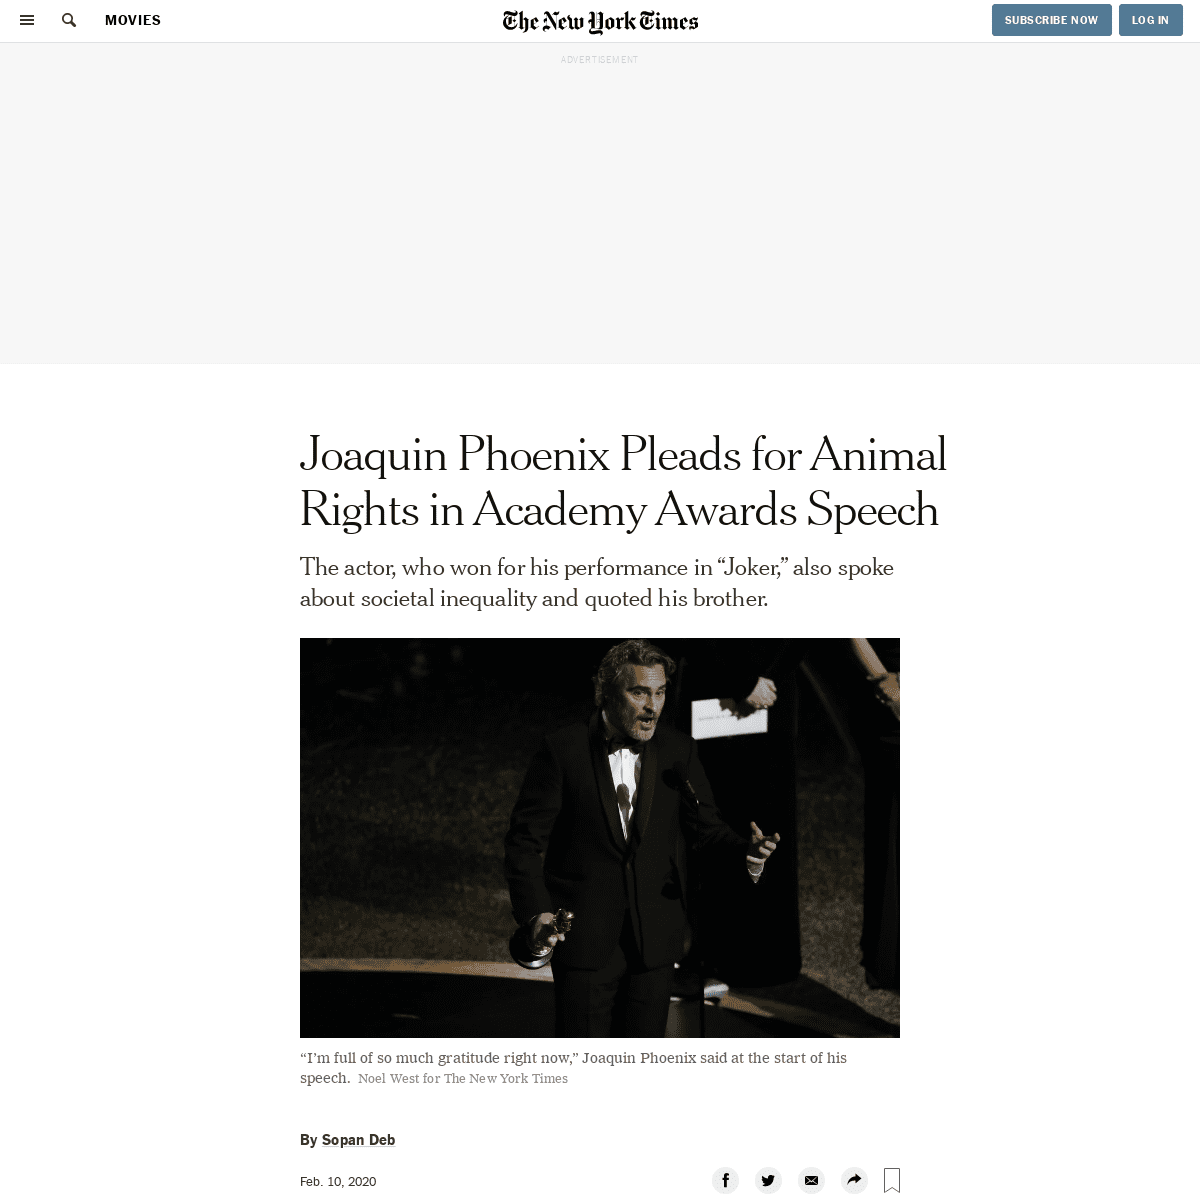 A complete backup of www.nytimes.com/2020/02/10/movies/joaquin-phoenix-oscars-speech.html